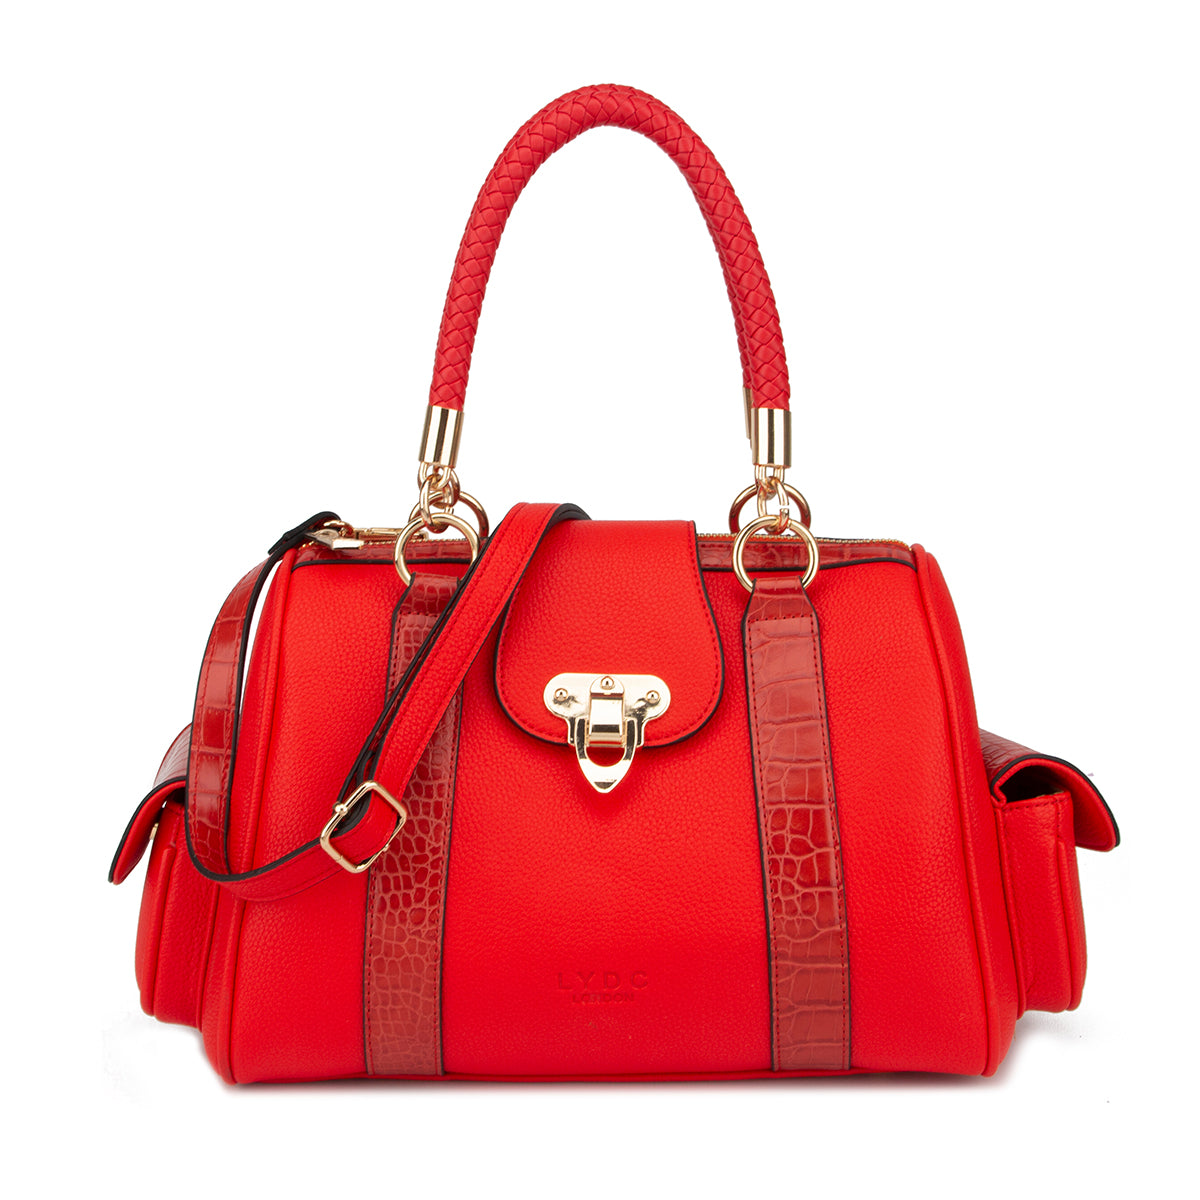 LYDC Medium Crossbody Handbag with adjustable Strap, Grab Handles along with Zipper and Clasp Closing Ladies Tote Handbag